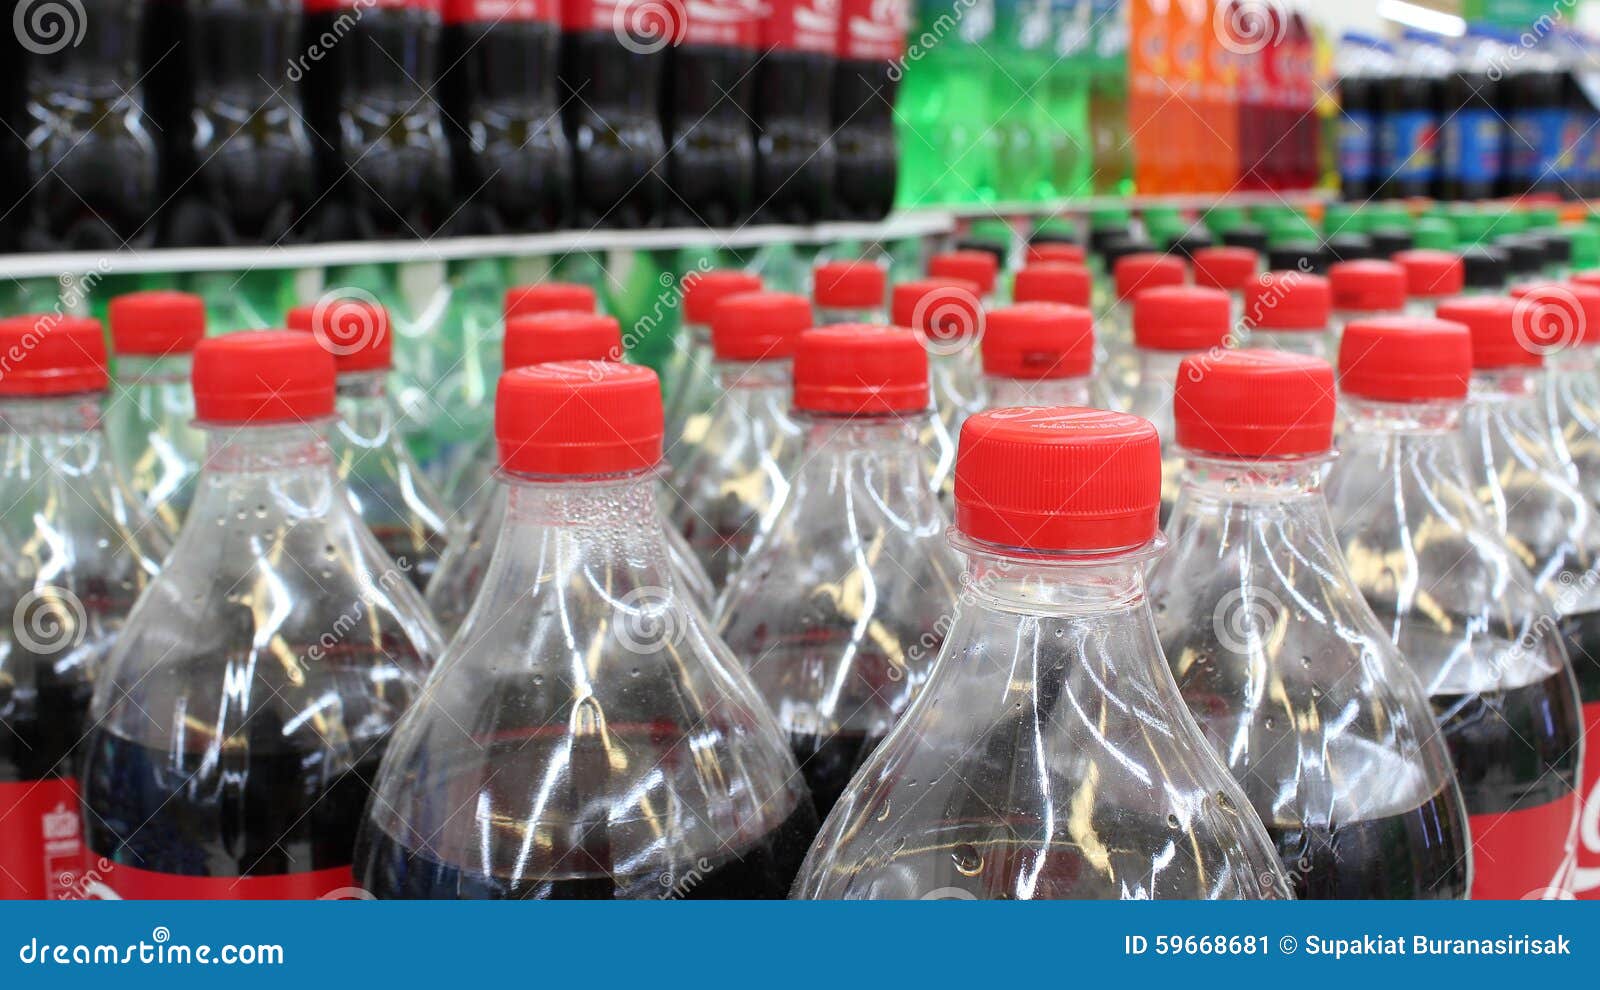 elf duurzame grondstof Detecteerbaar Plastic bottles in shop stock image. Image of drink, full - 59668681